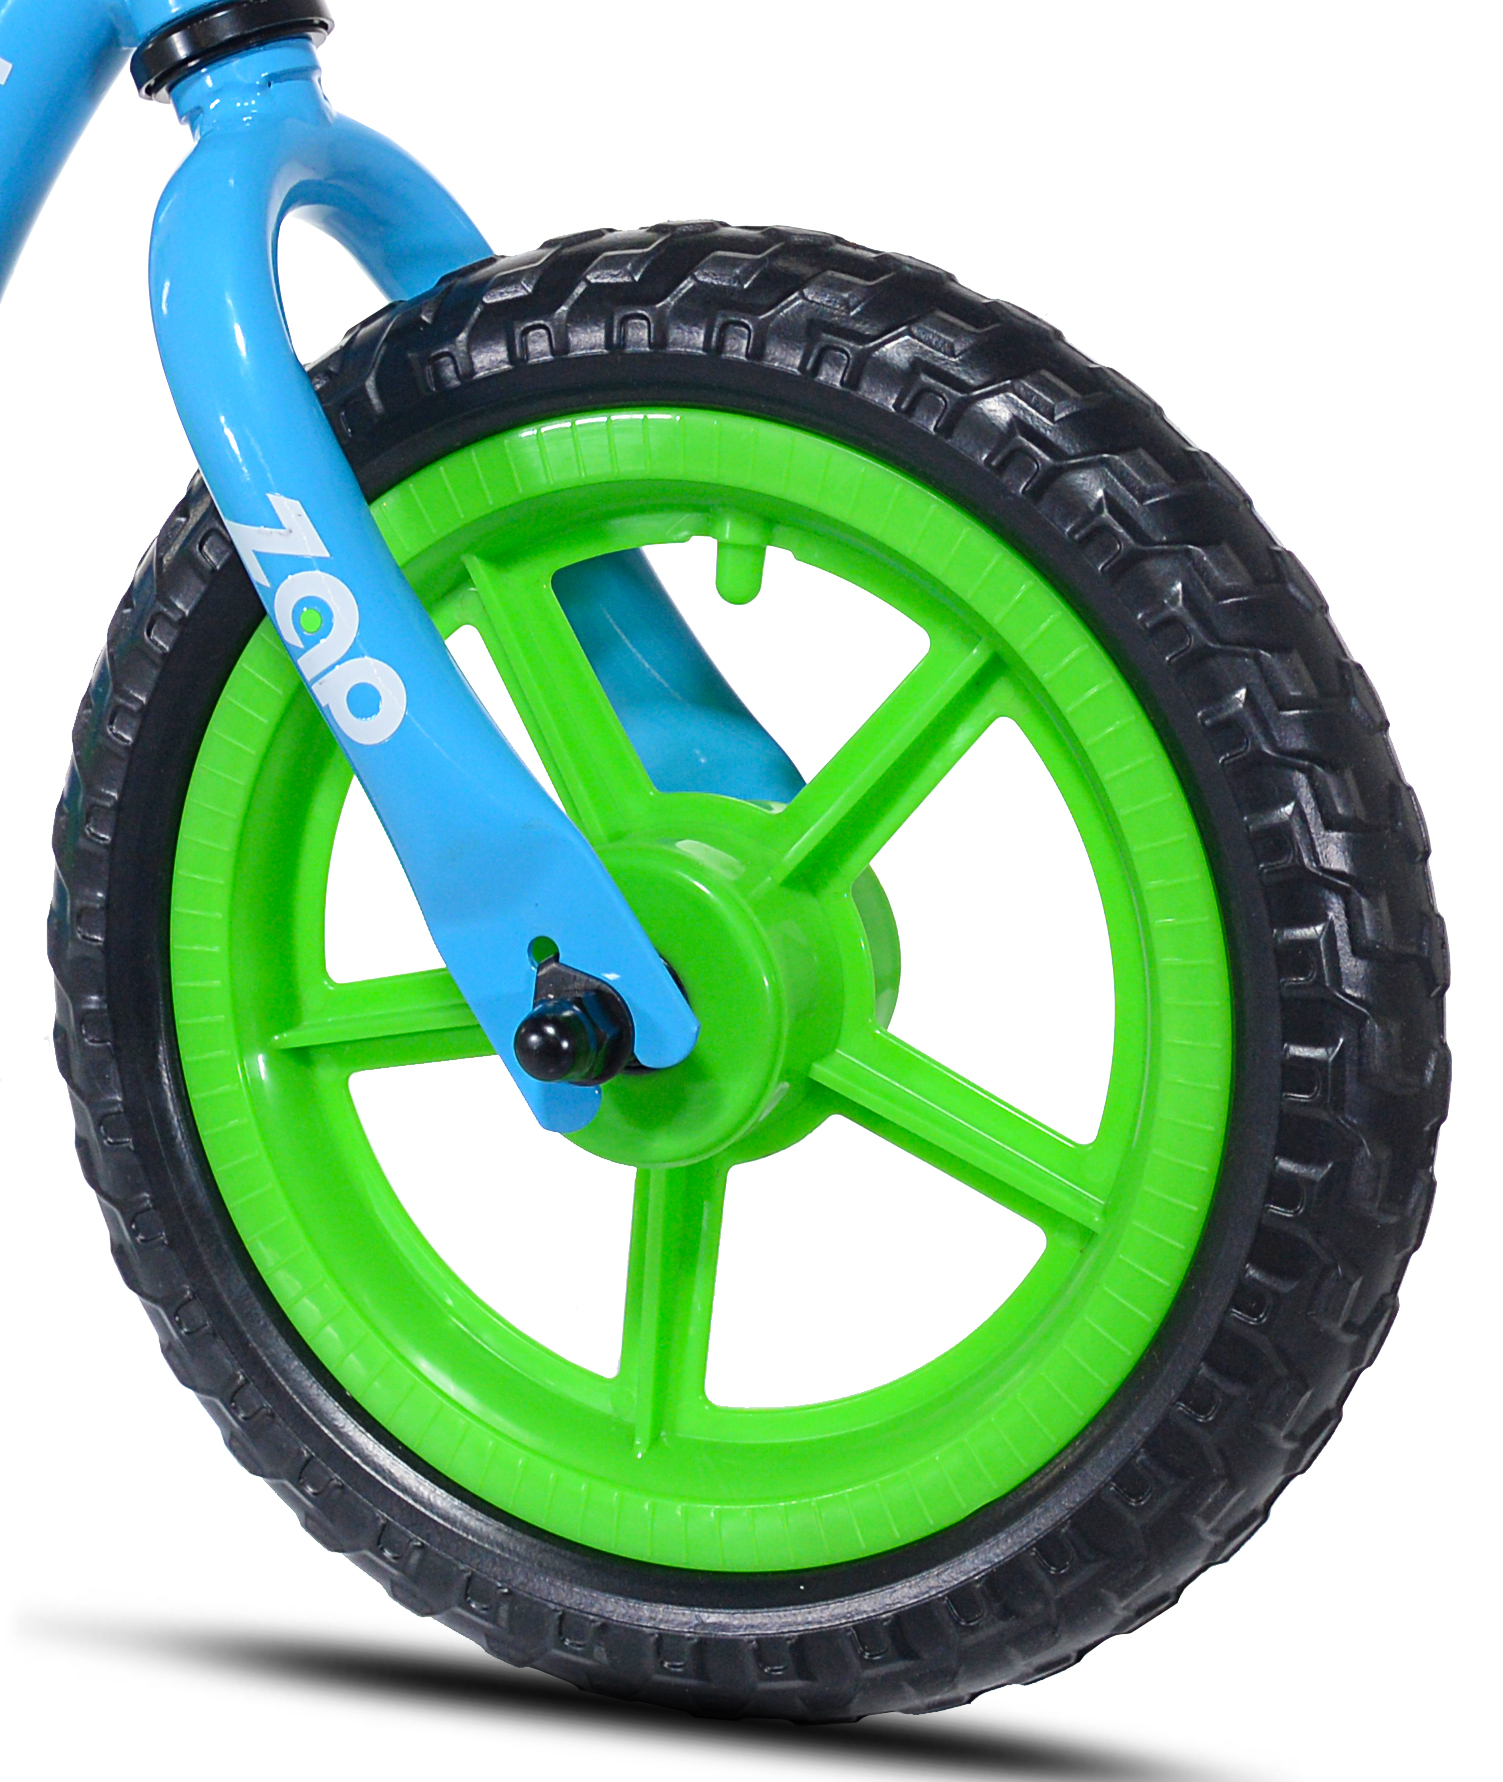 KaZAM 12" Child's Balance Bike and Helmet, Green/Blue - image 4 of 9